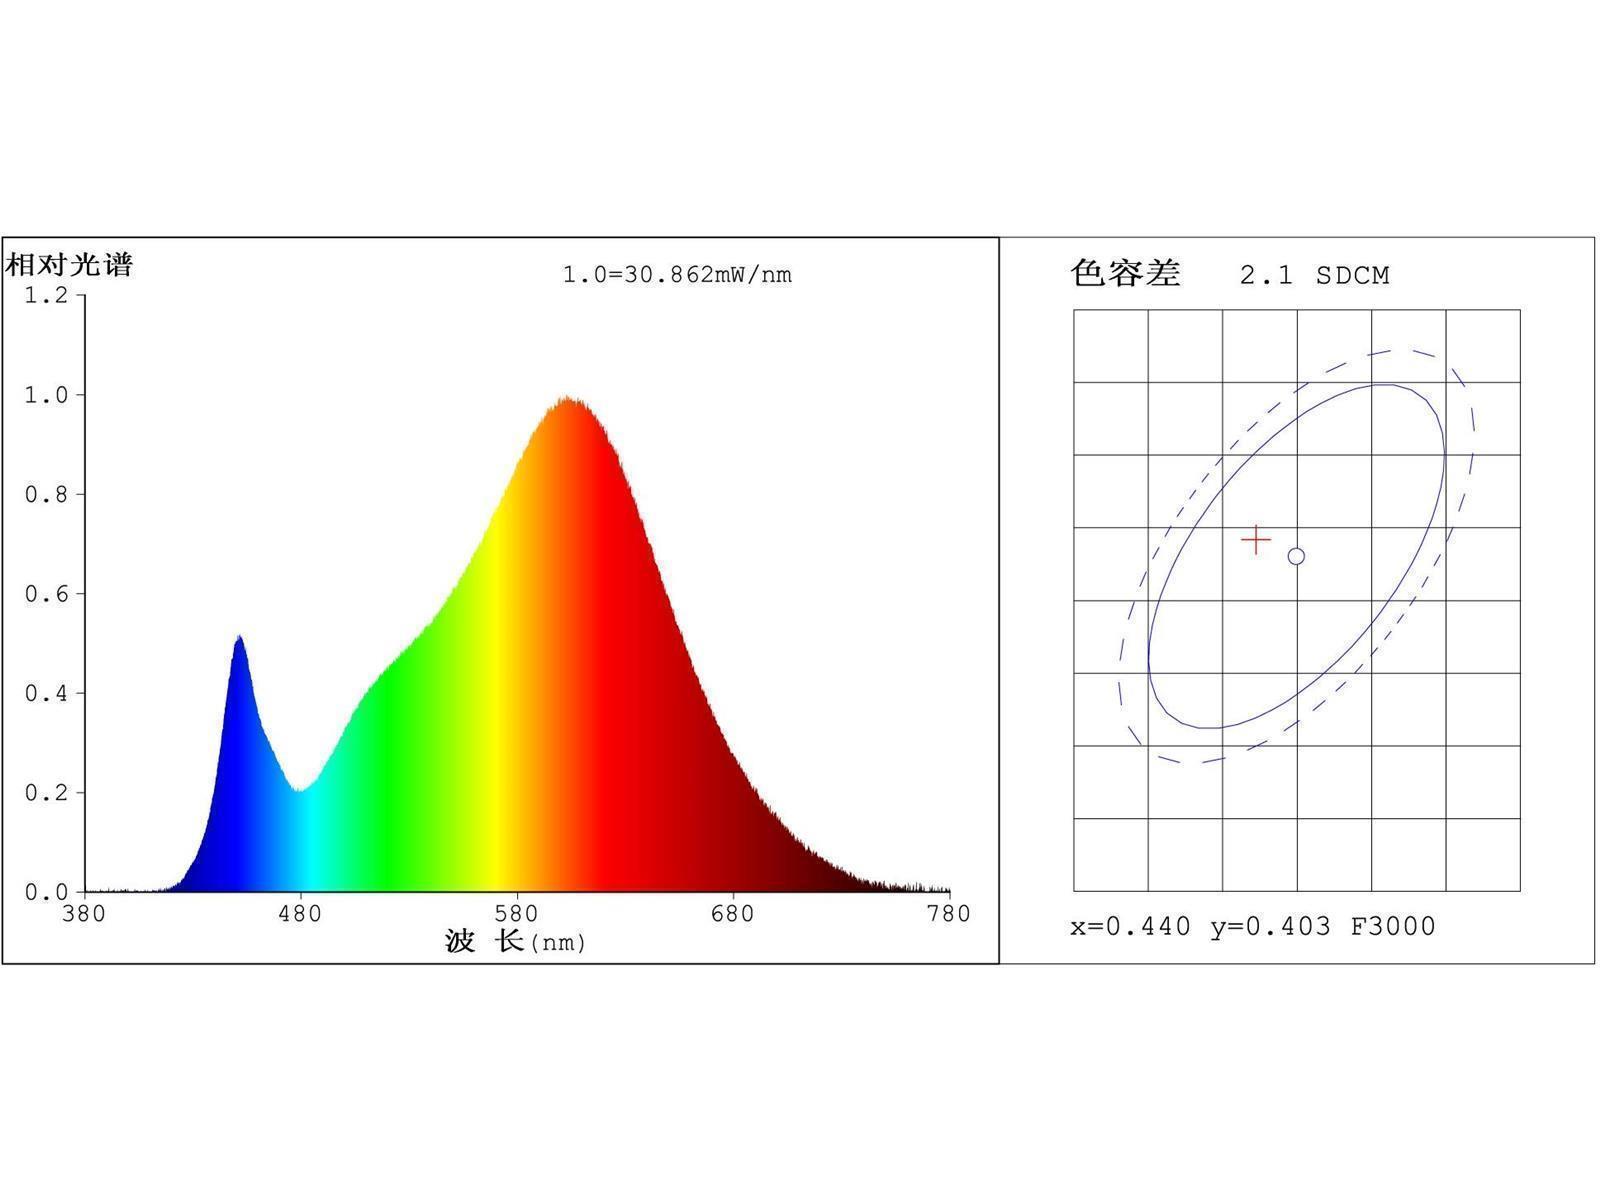 LED Strahler PAR38, 18W, 28x SMD-LED1450lm, 45°, 230V, 4000K neutralweiß